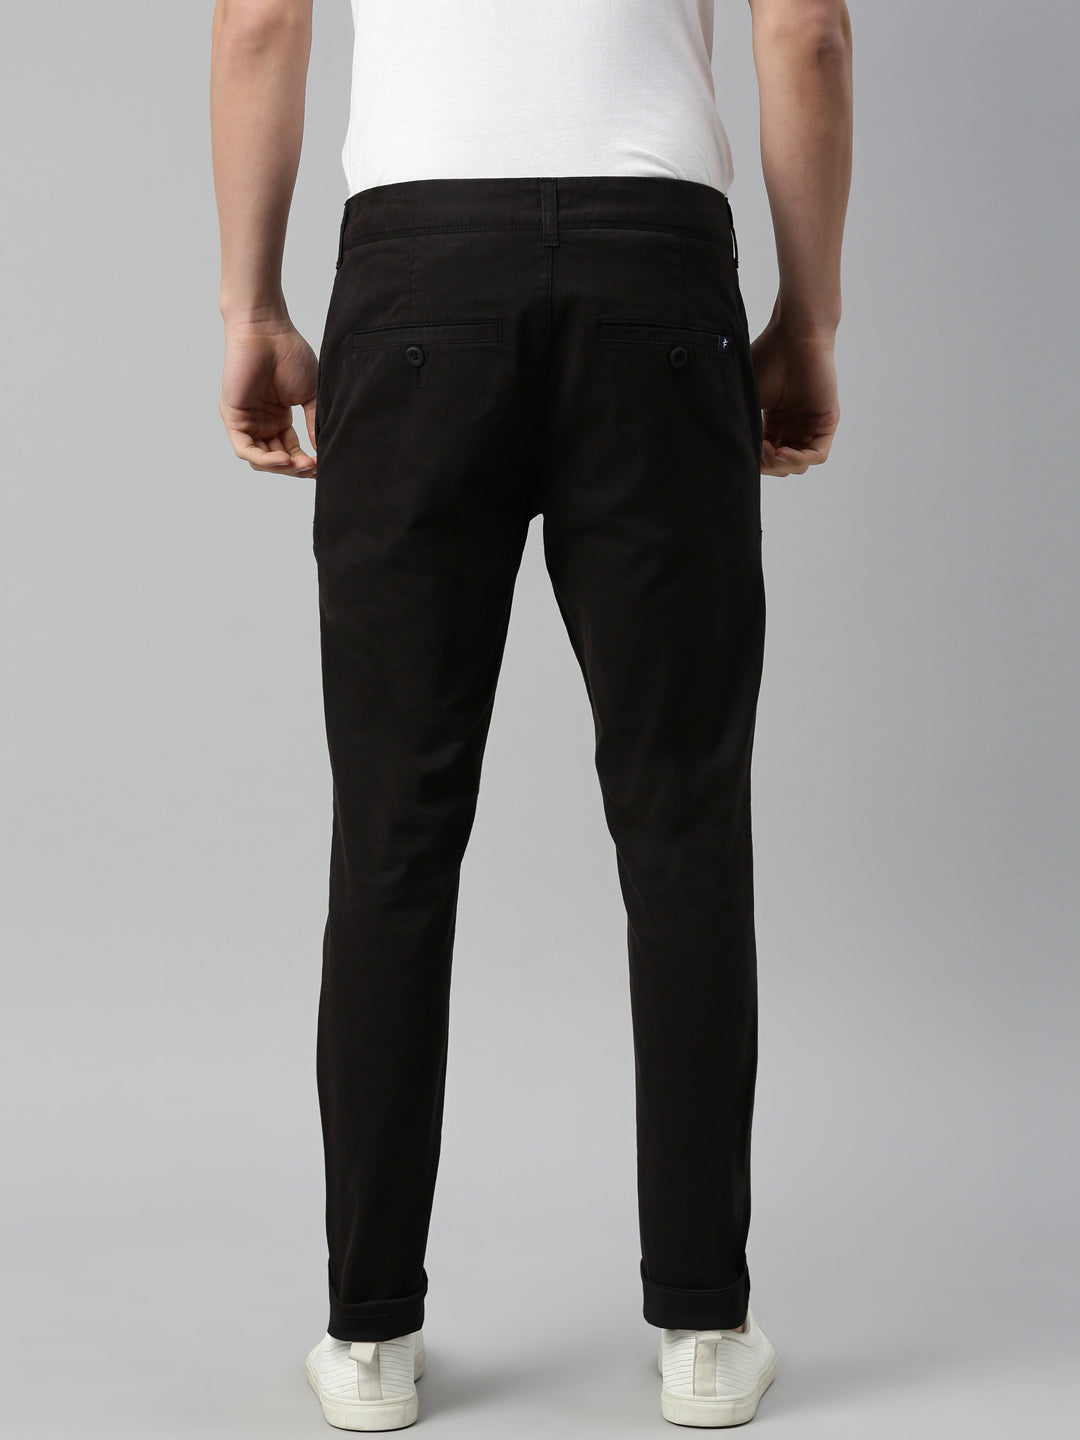 Buy Breakbounce Men's Slim Fit Casual Trousers (CRTR01_Black_36W x 32L) at  Amazon.in